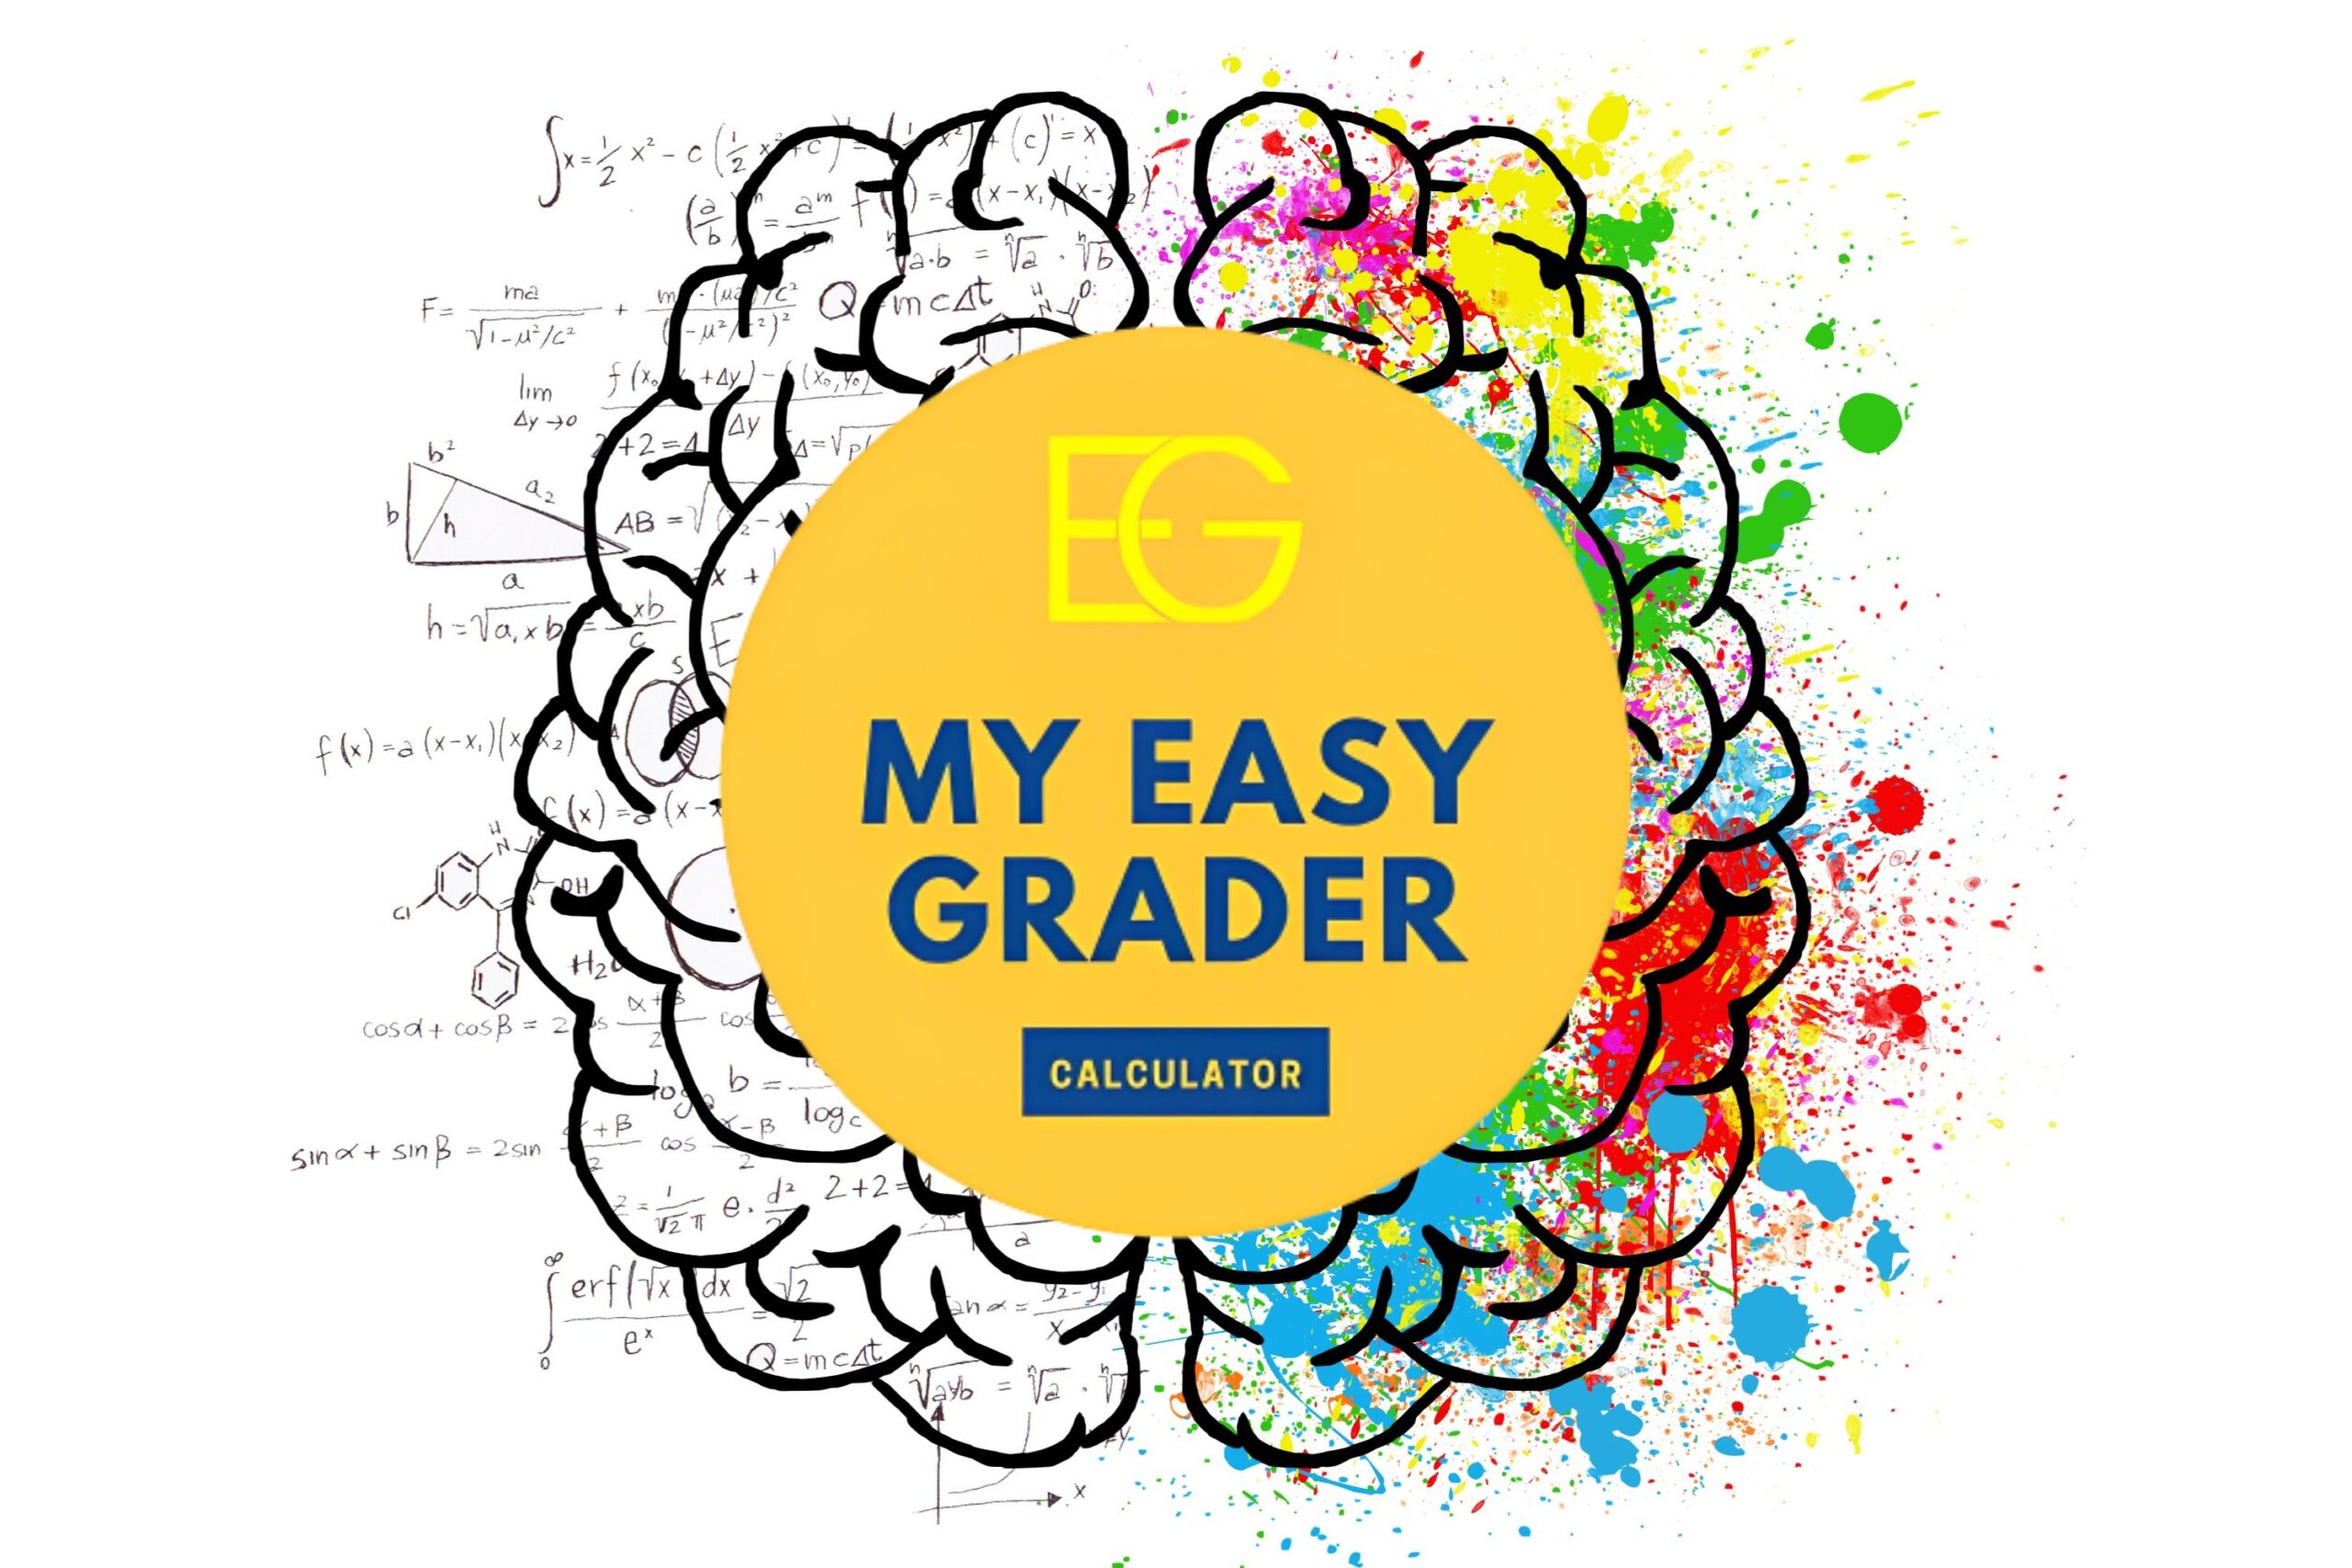 My Easy Grader Calculator for Grading Psychology – #1 Easy Tool